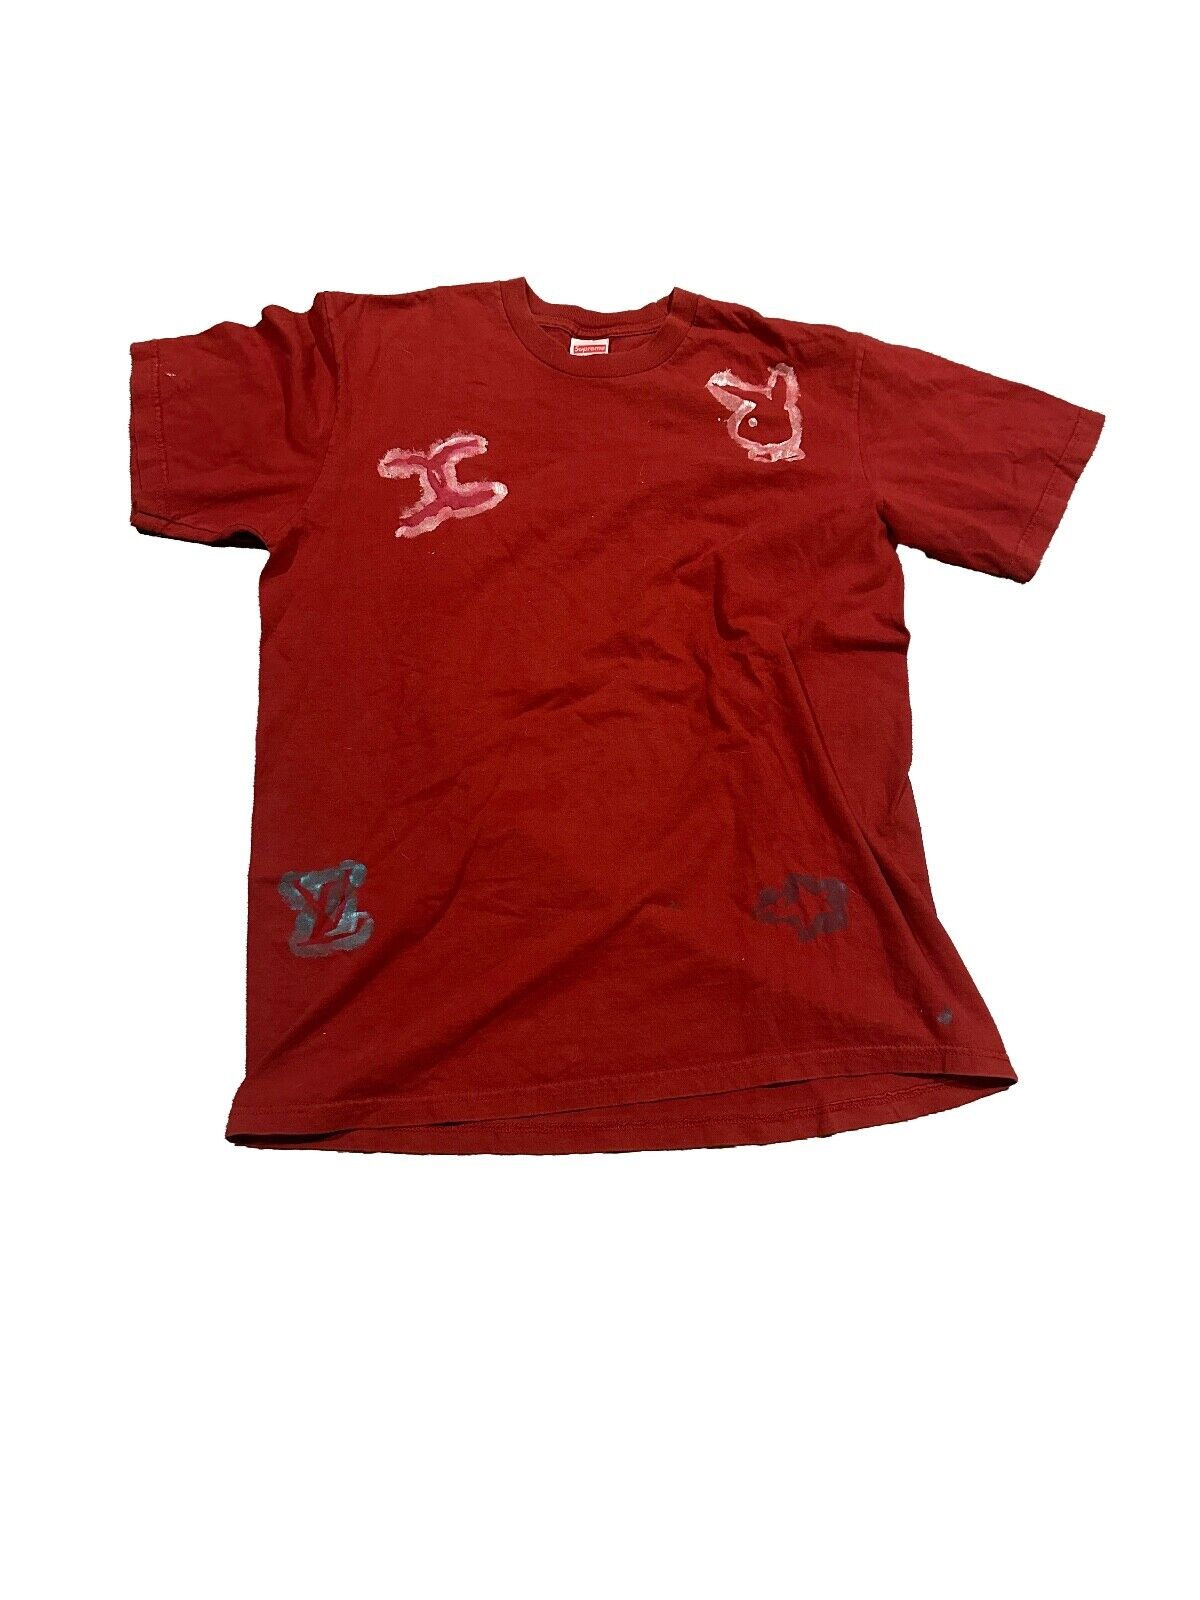 Supreme Shirt "Custom" Red Distressed Streetwear Fashion Size Medium